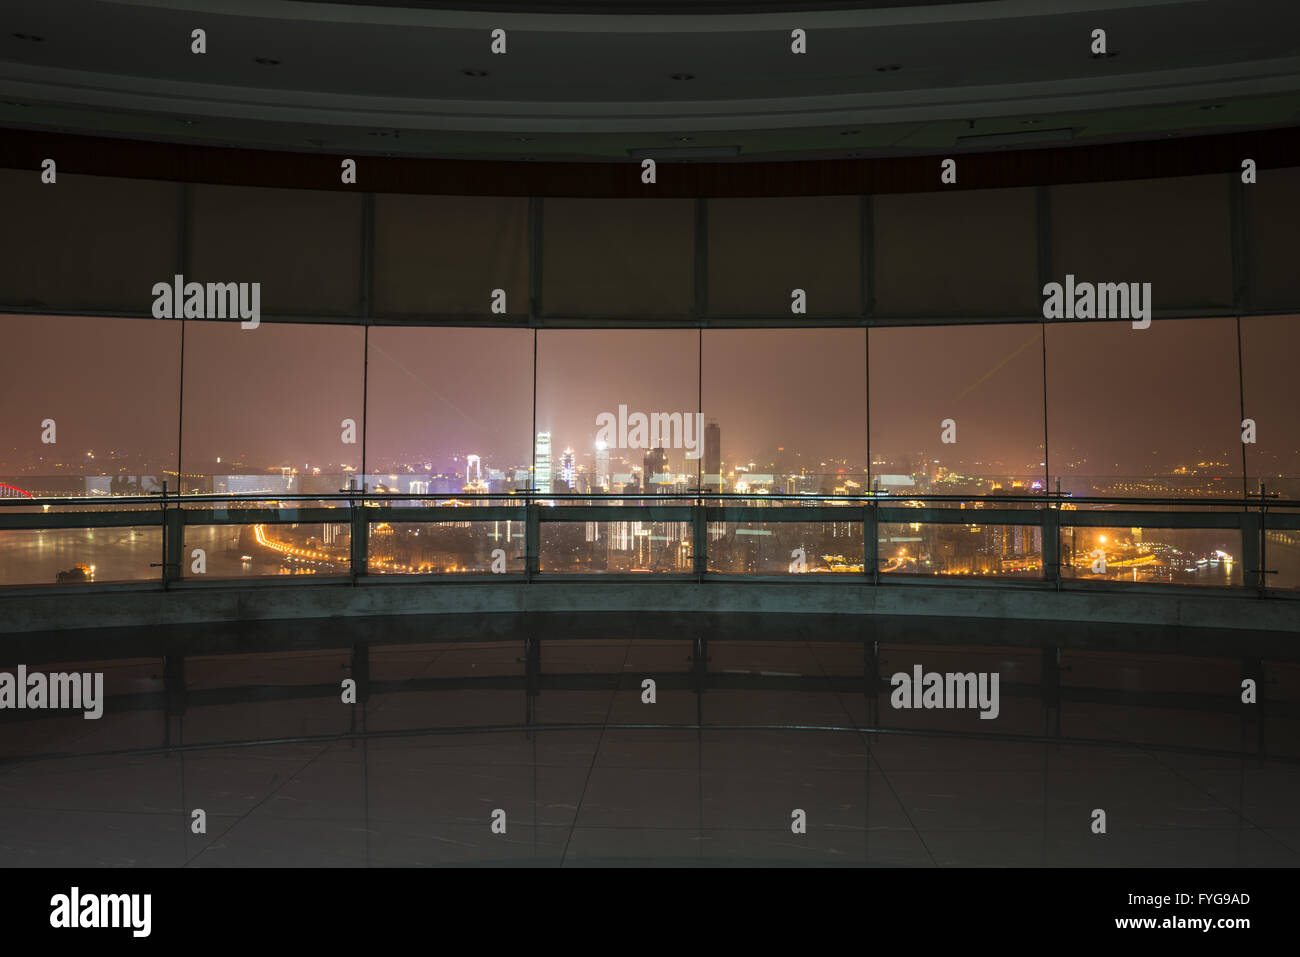 windows in offic with beautiful night scene Stock Photo